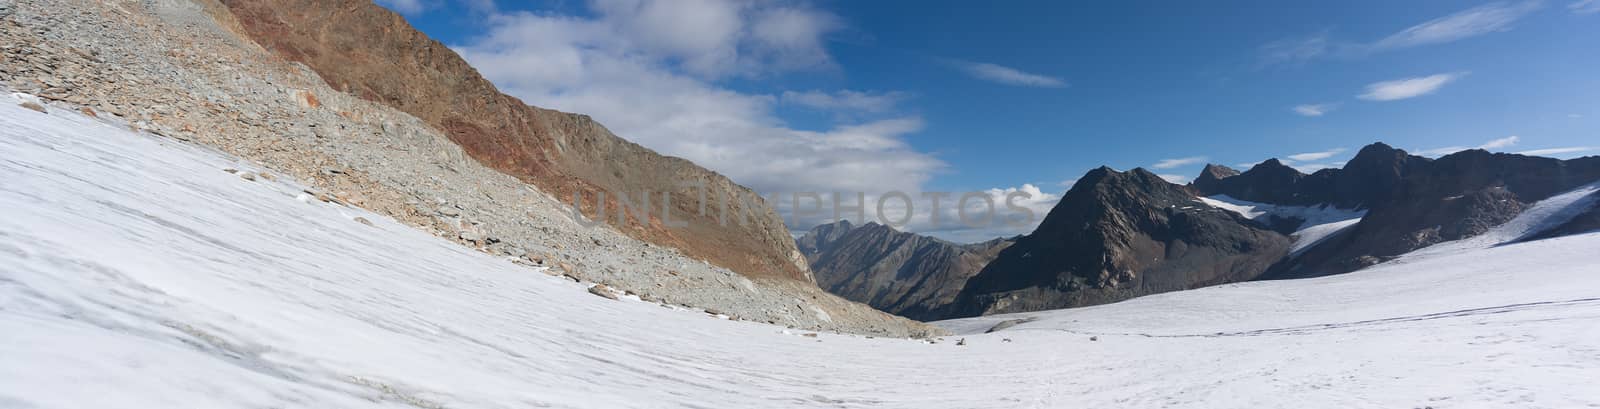 High Alps Summit panorama by javax